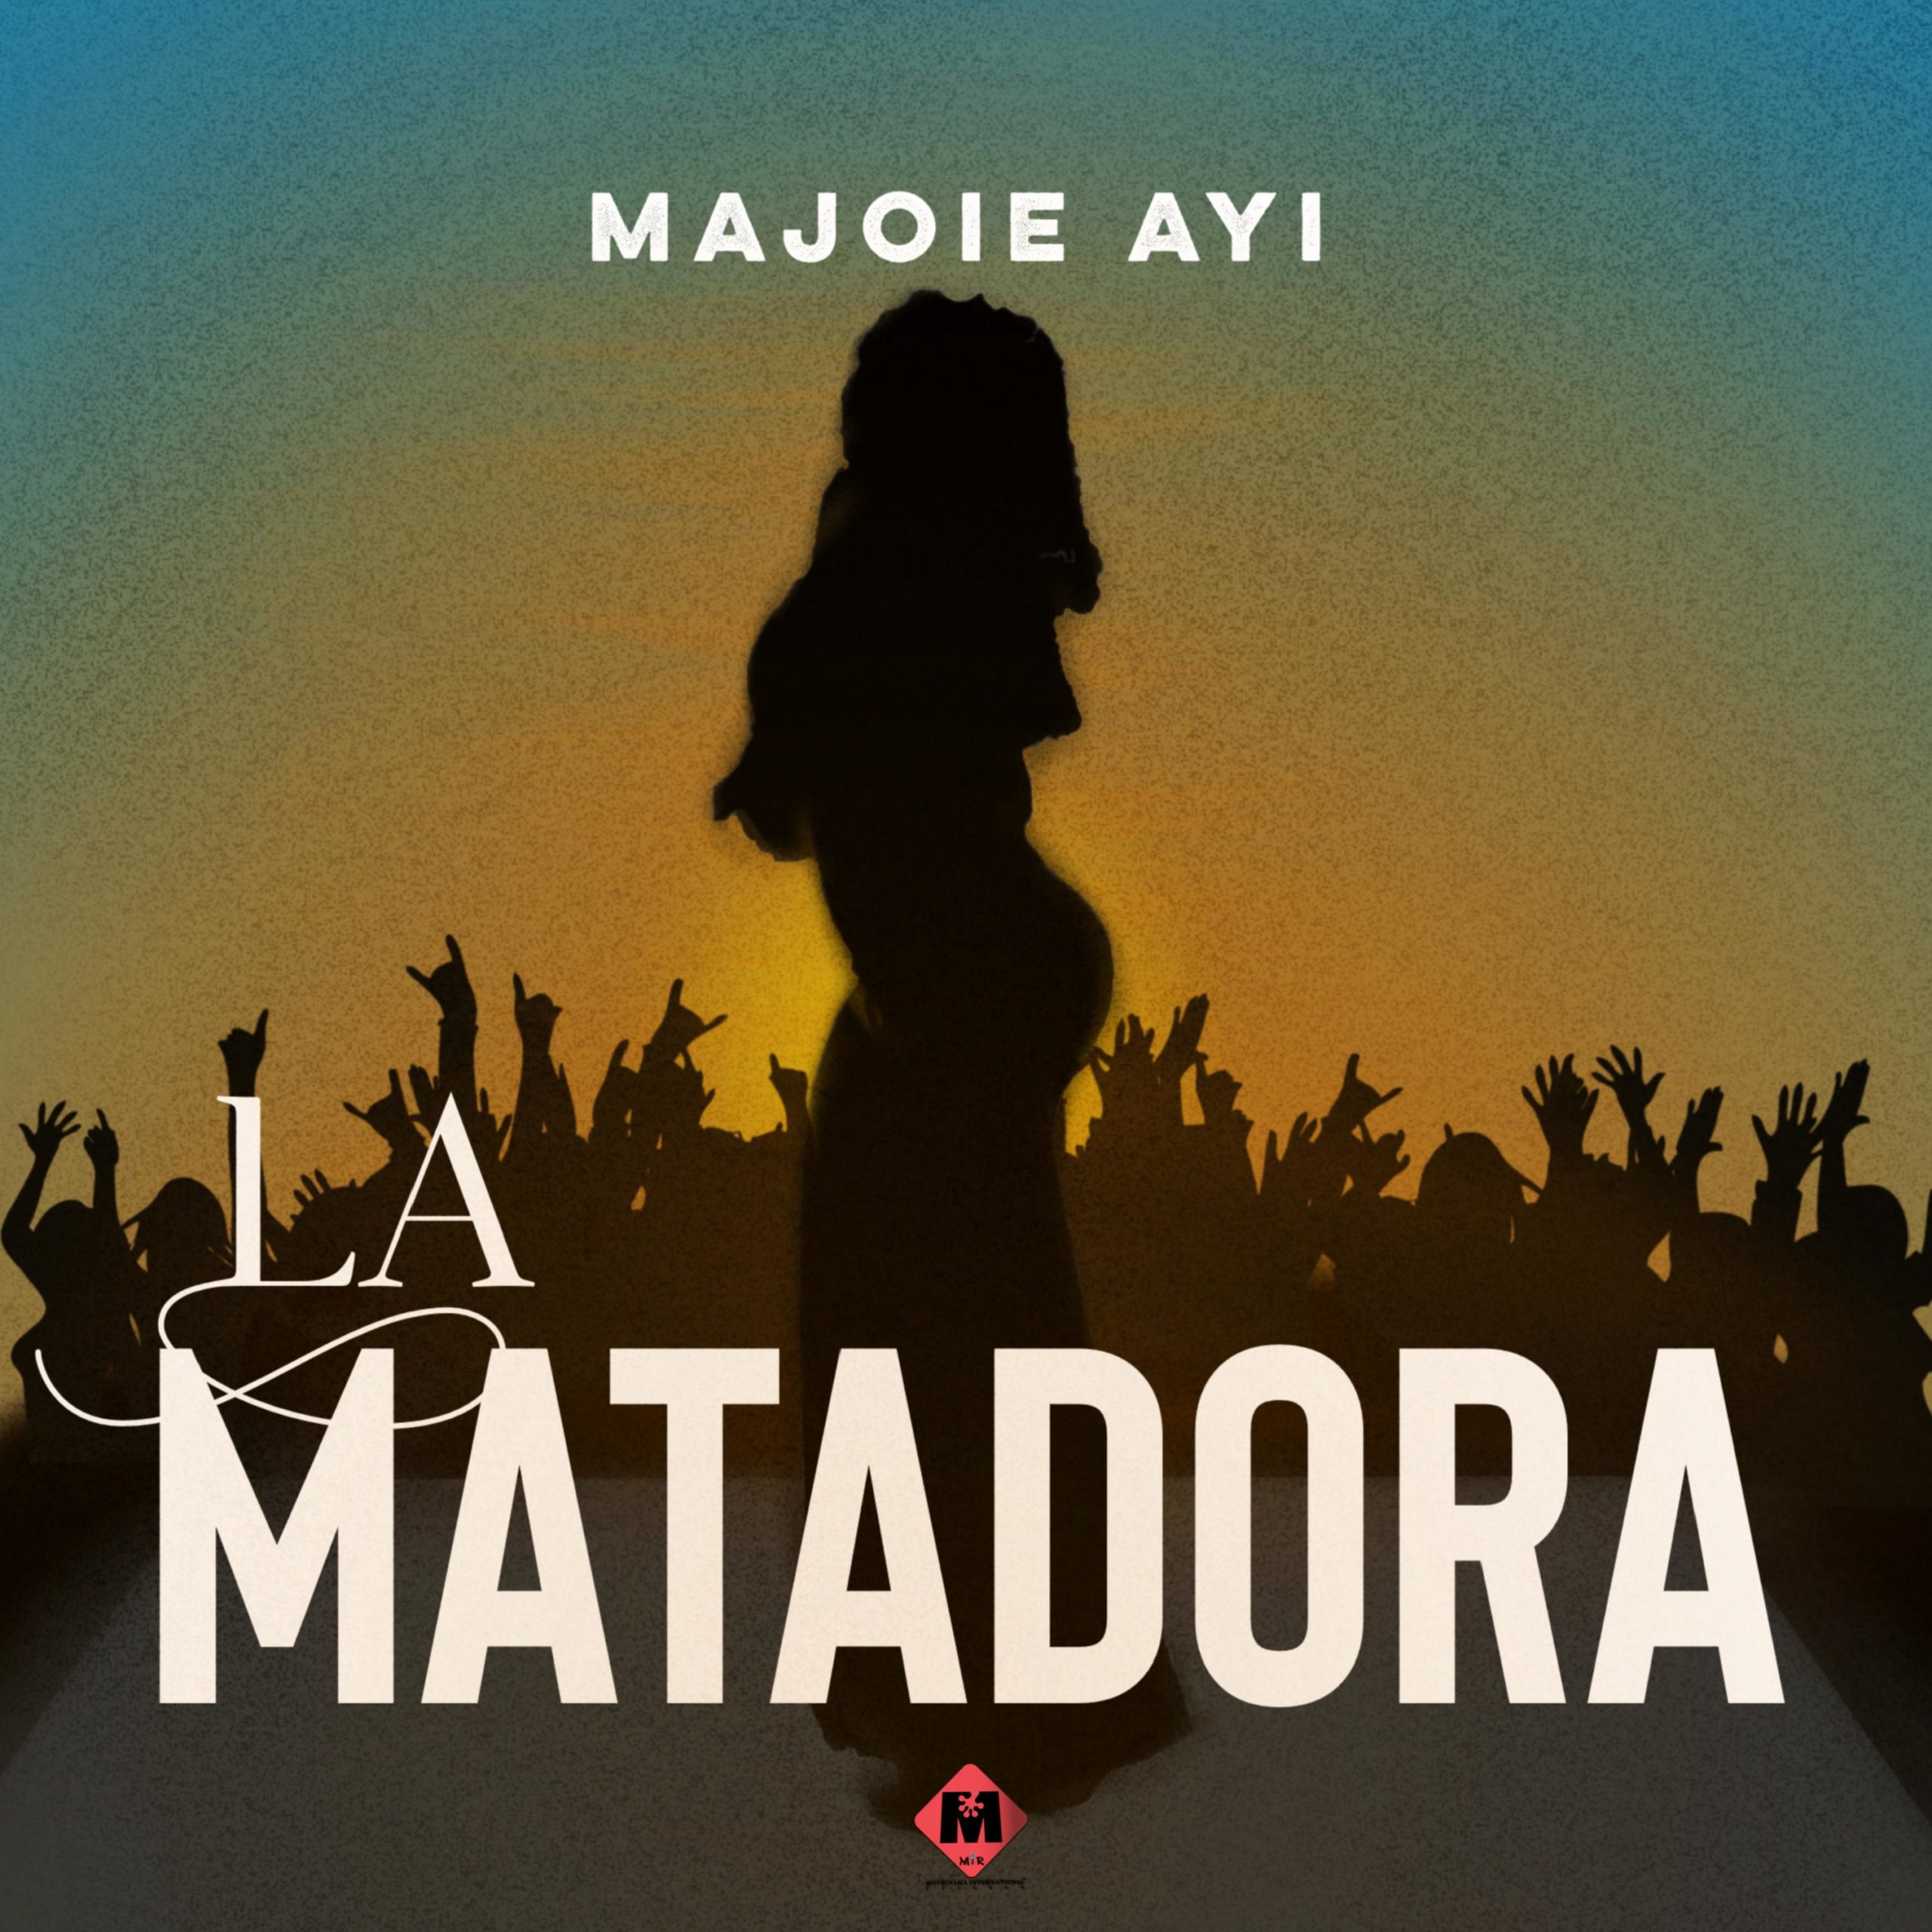 MAJOIE AYI - LA MATADORA